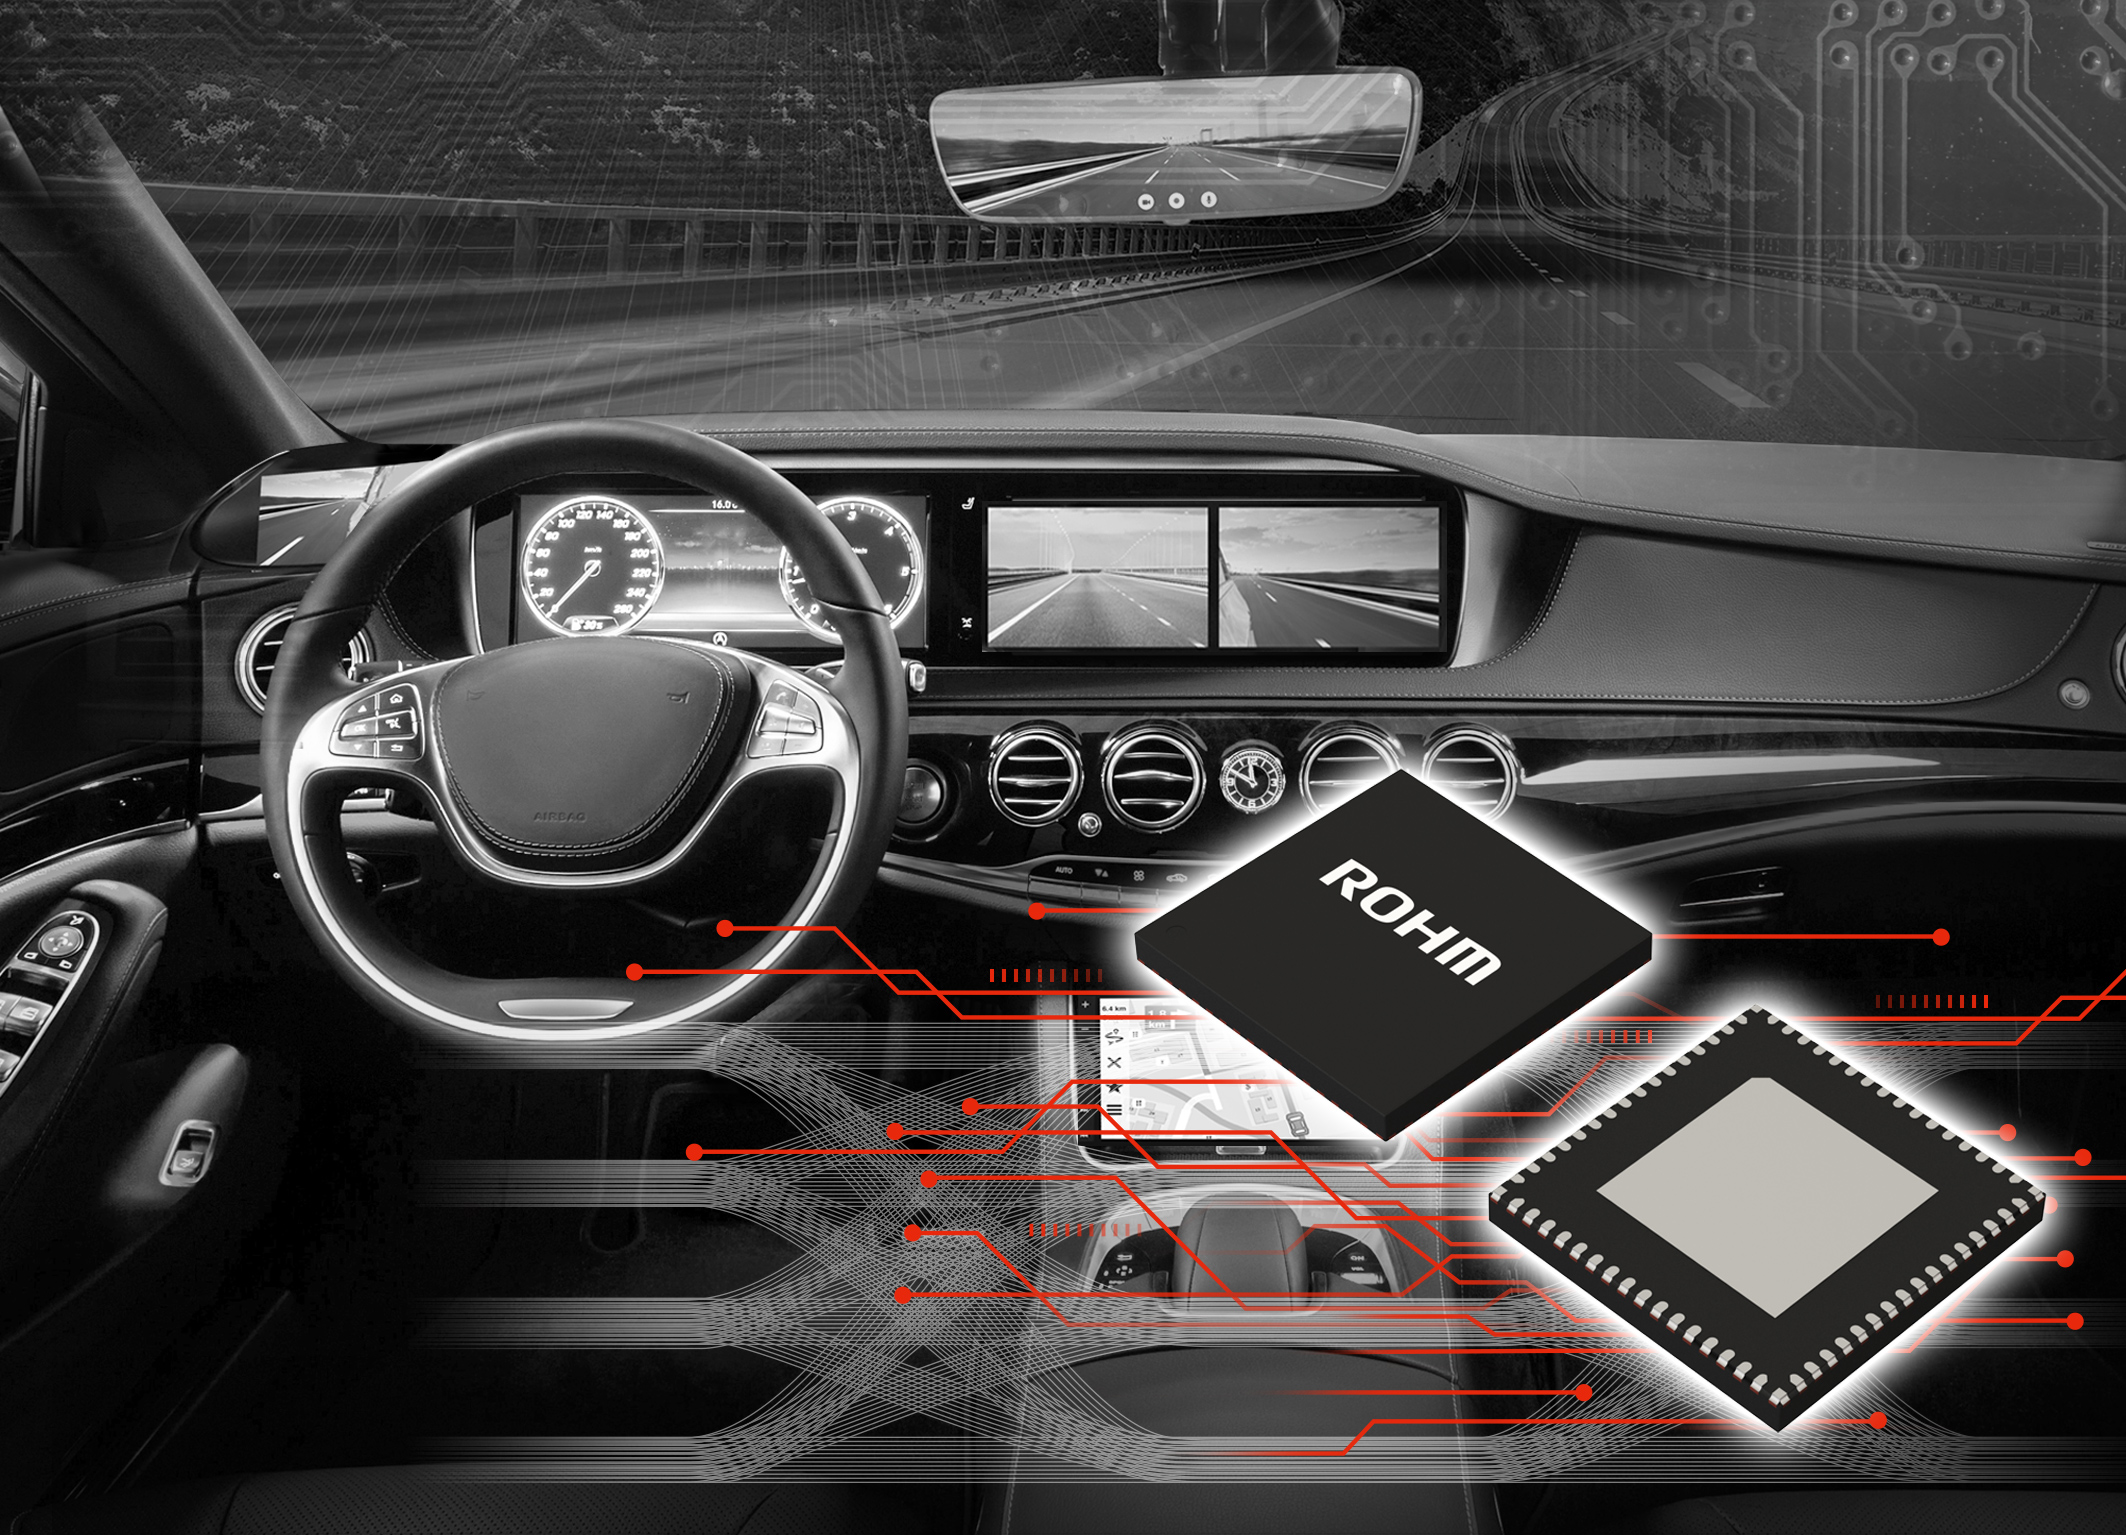 ICs for Automotive Multi-Displays Simplify Video Transmission